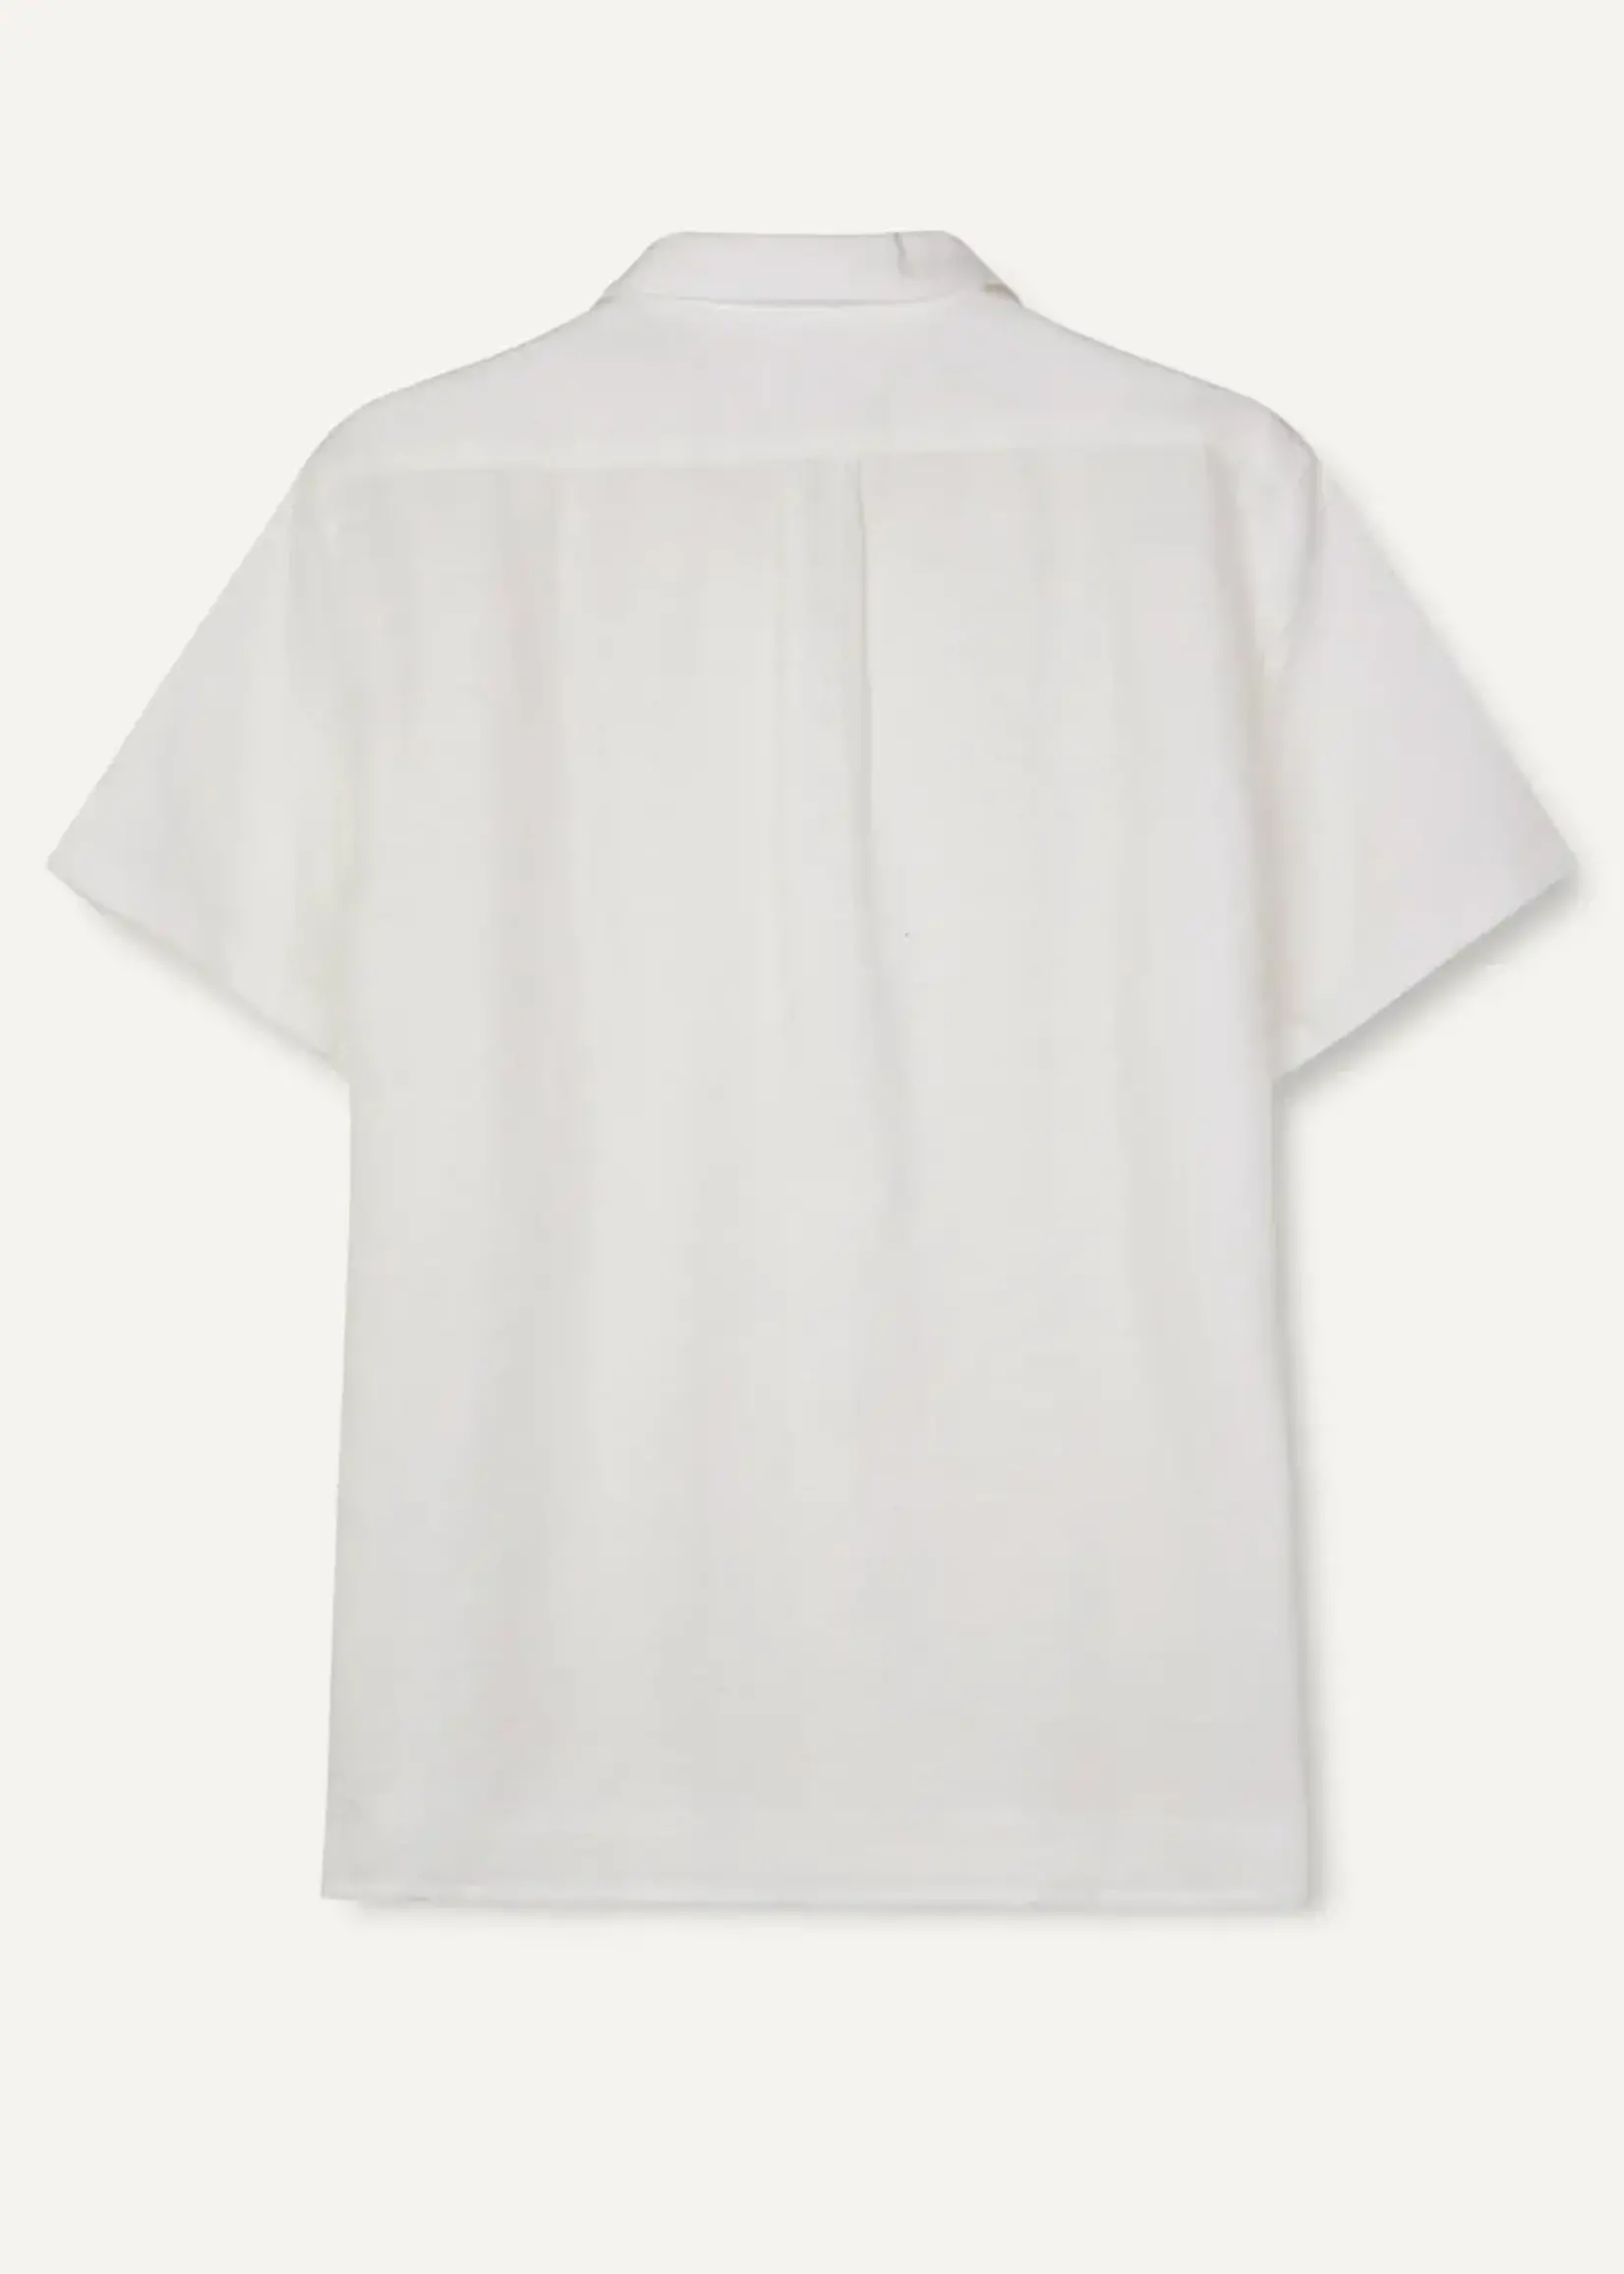 Libertine - Libertine Libertine-Libertine Cave shirt off white